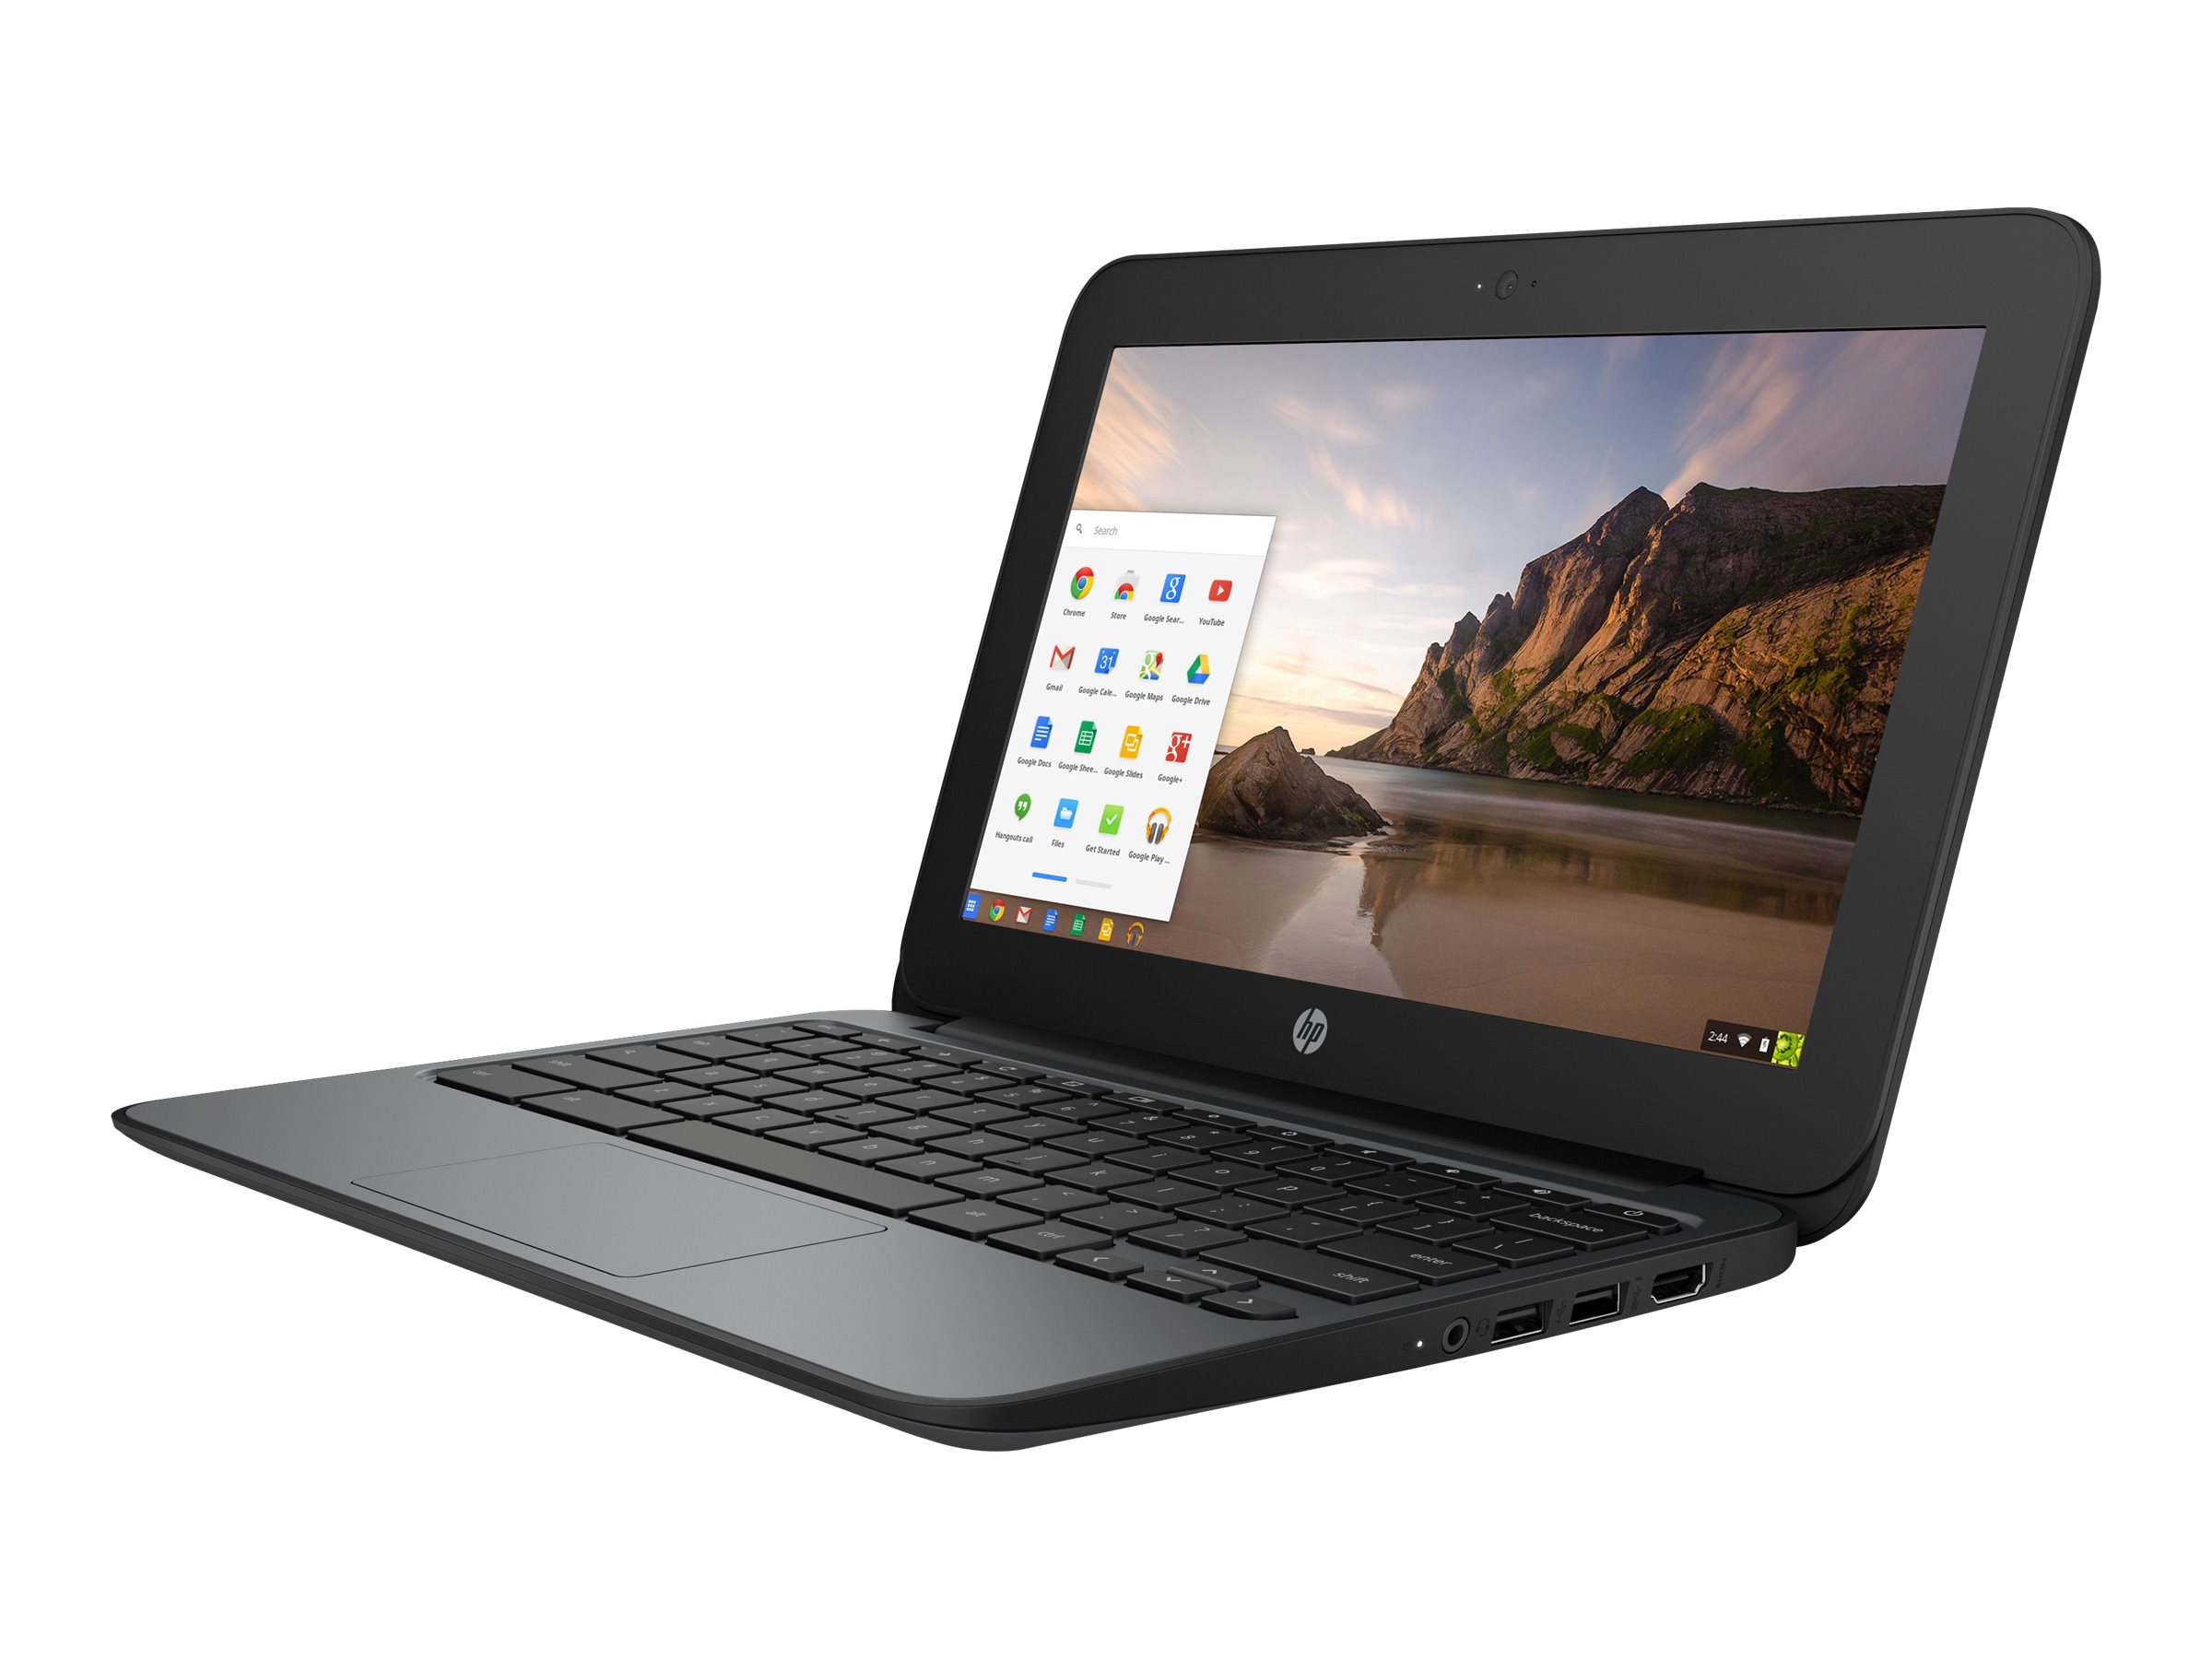 HP Chromebook 11 G4 - Celeron N2840 / 2.16 GHz | www.shi.com